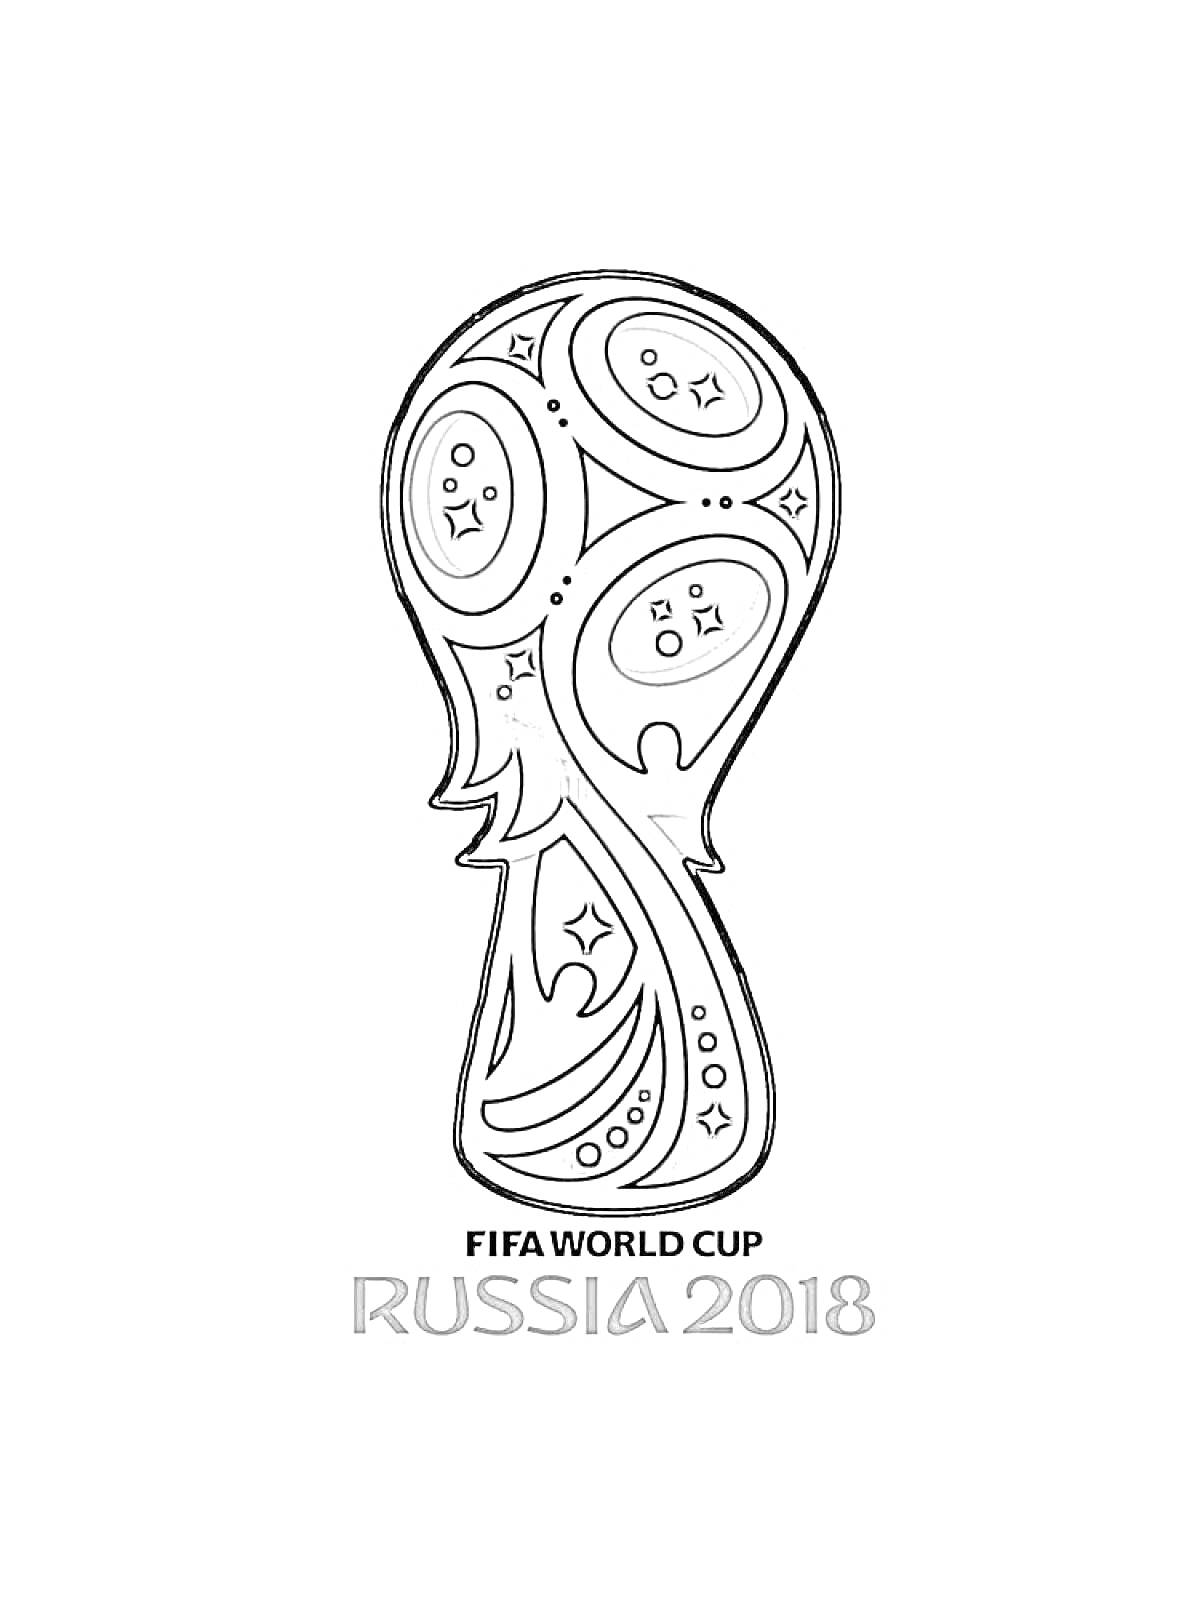 Раскраска Кубок FIFA WORLD CUP RUSSIA 2018 со звездочками, кругами и декоративными элементами